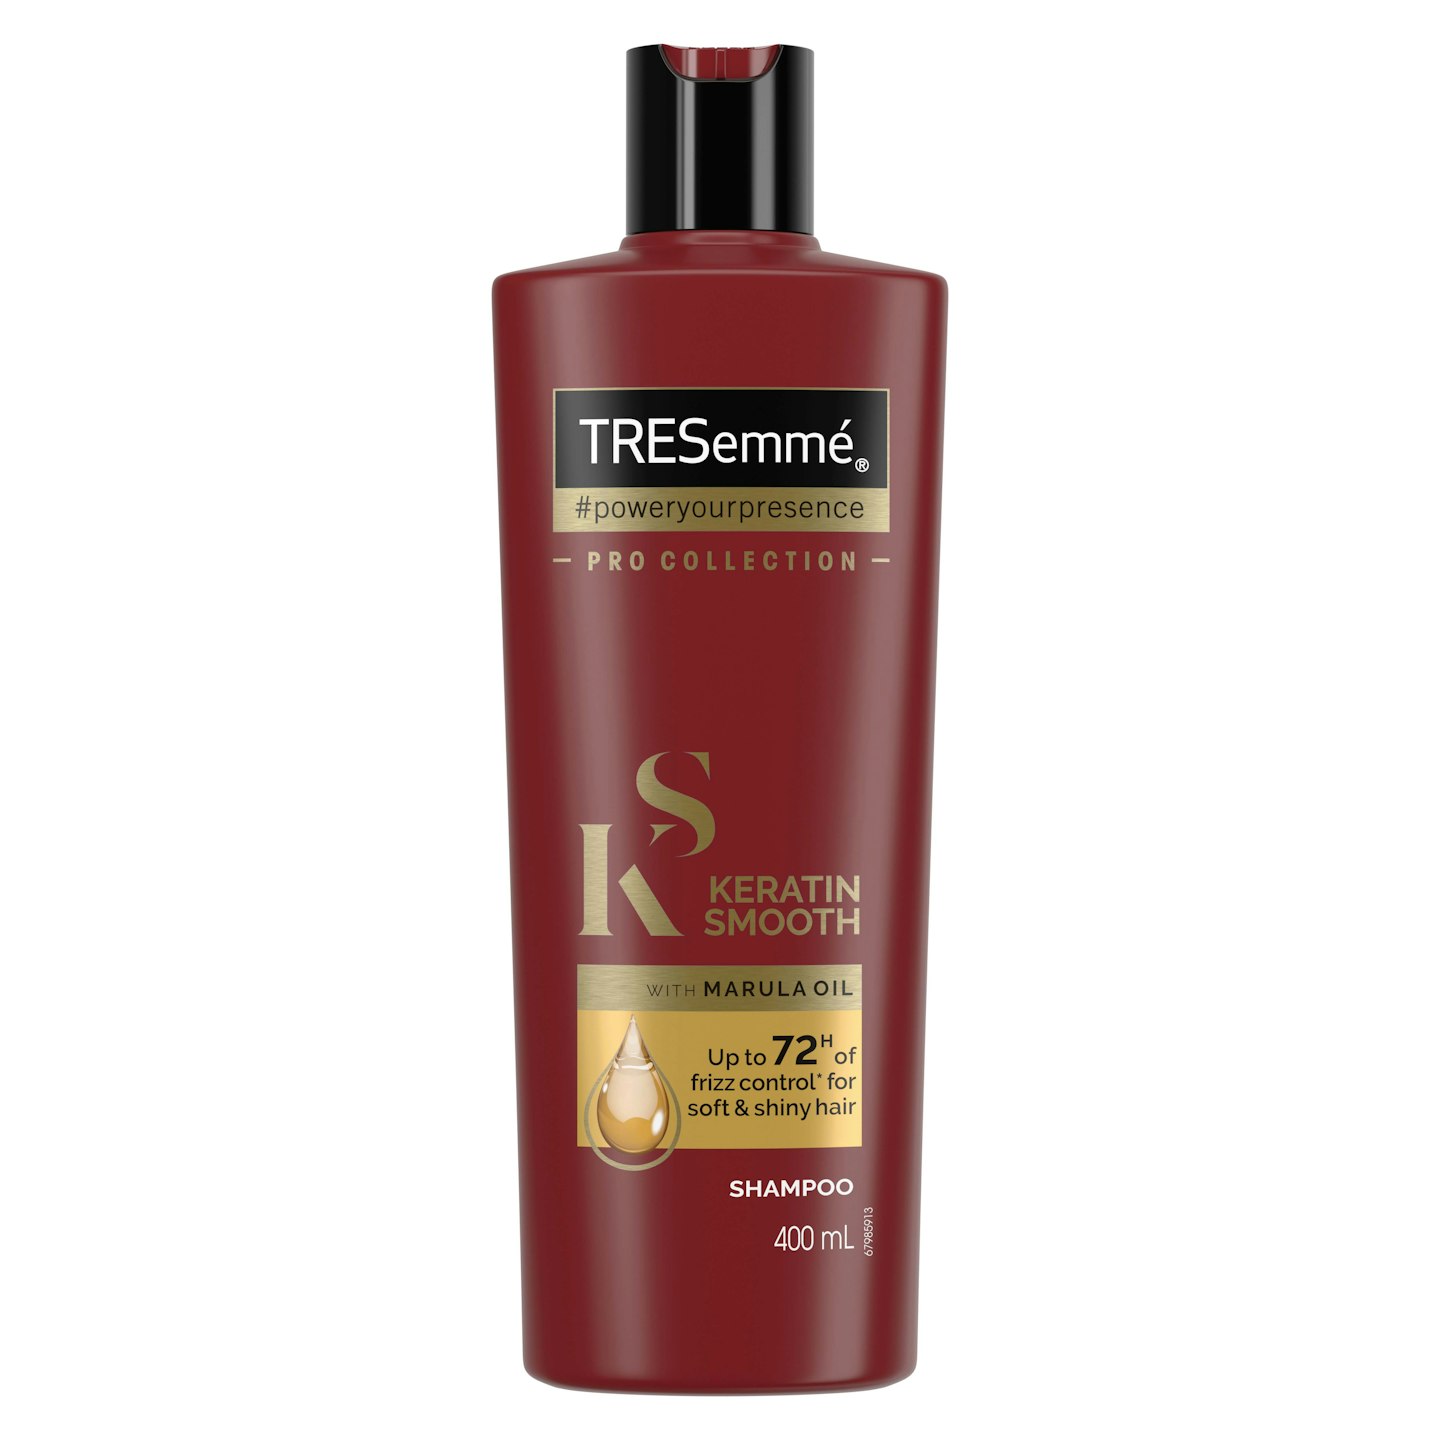 TRESemmu00e9 Keratin Smooth Shampoo